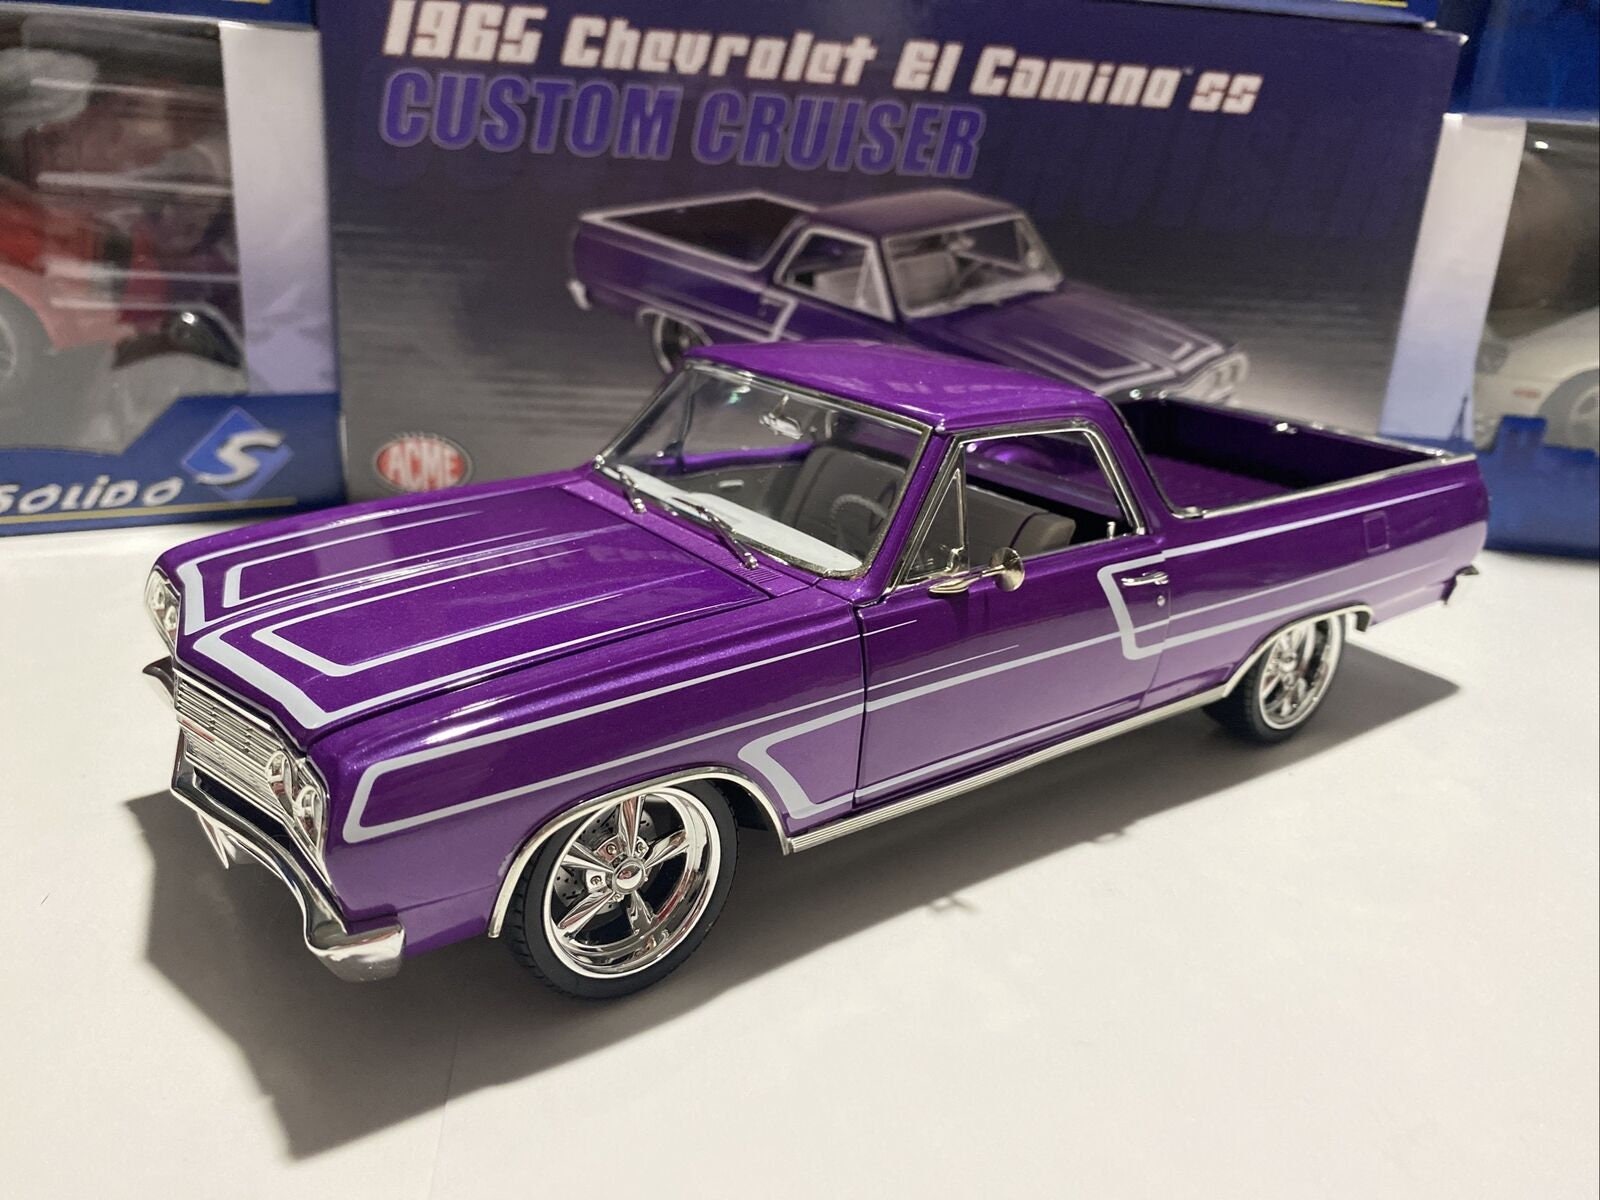 1965 Chevrolet El Camino SS Custom Cruiser Purple 1/18 Scale